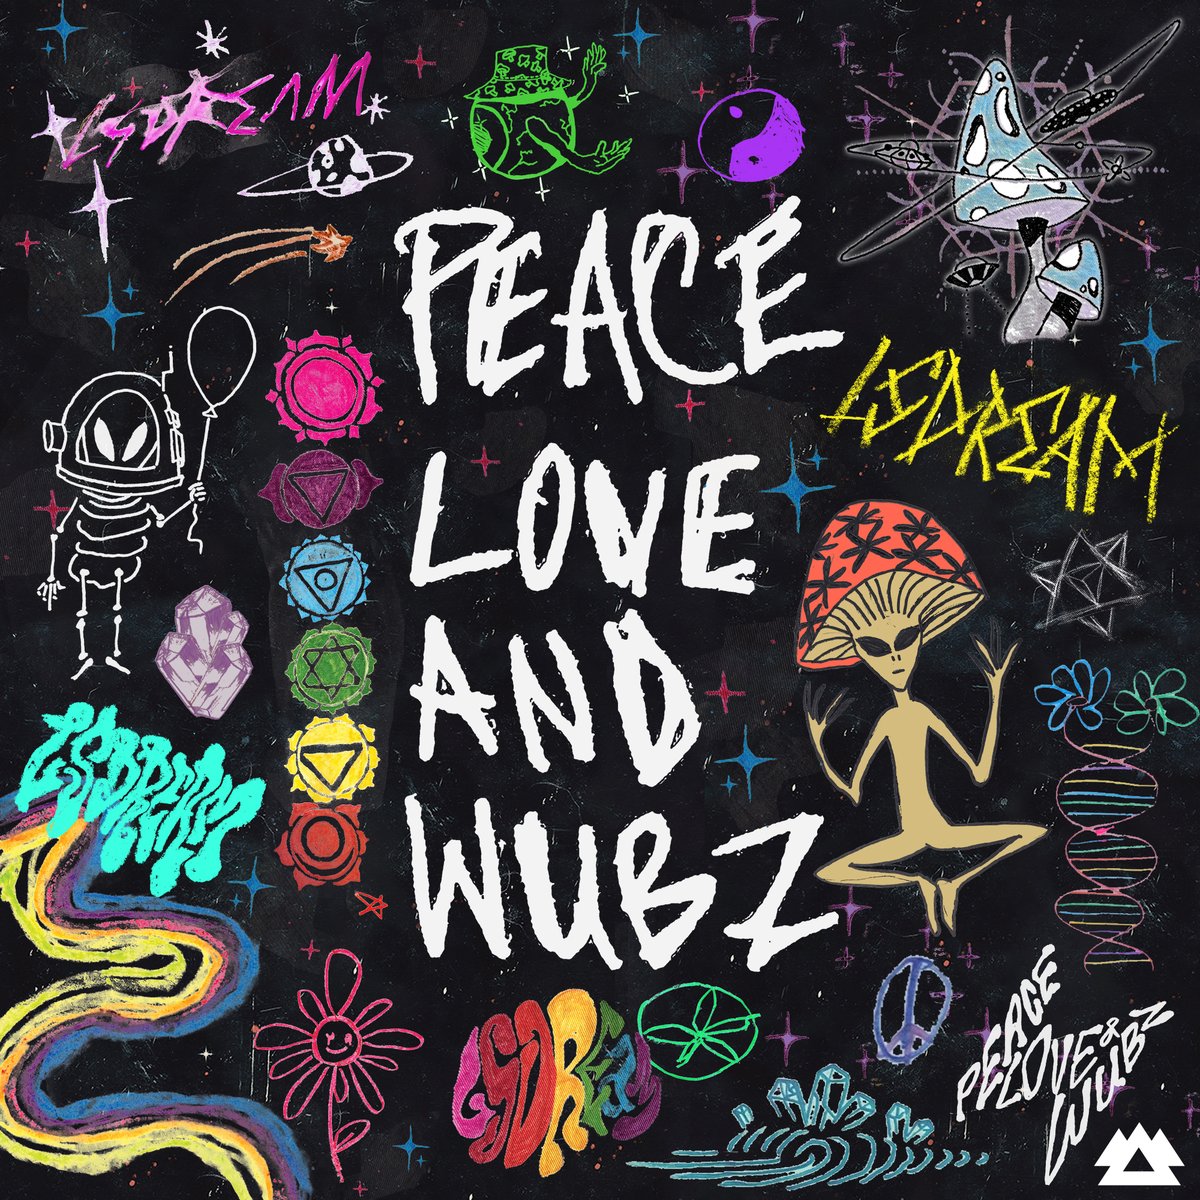 LSDREAM & CoJaxx Spread “PEACE LOVE & WUBZ” on WAKAAN